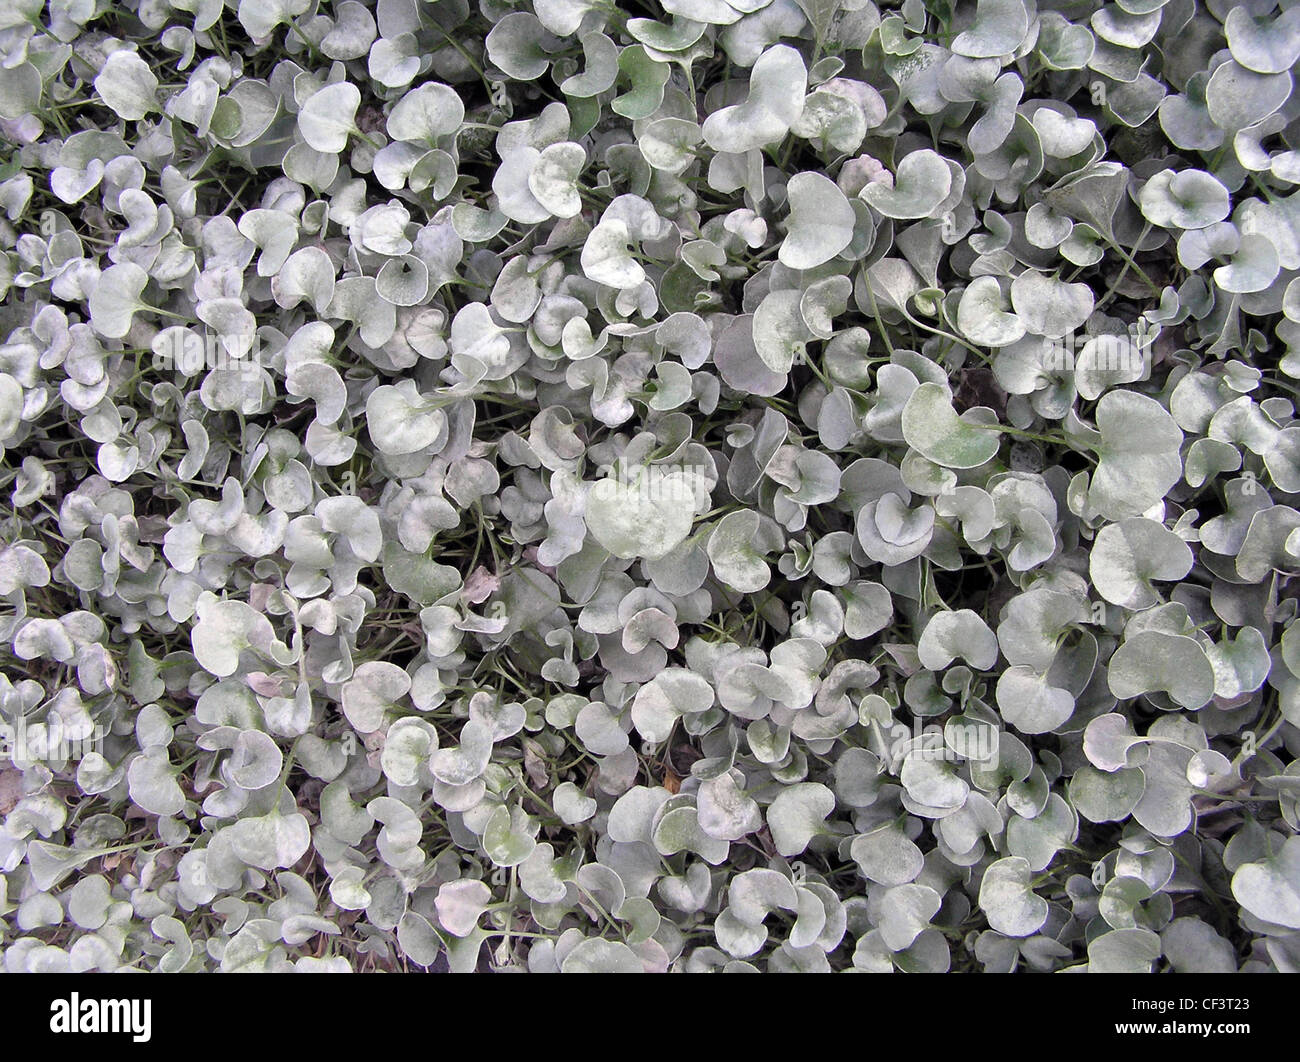 Dichondra argentea 'Silver Falls' Stock Photo